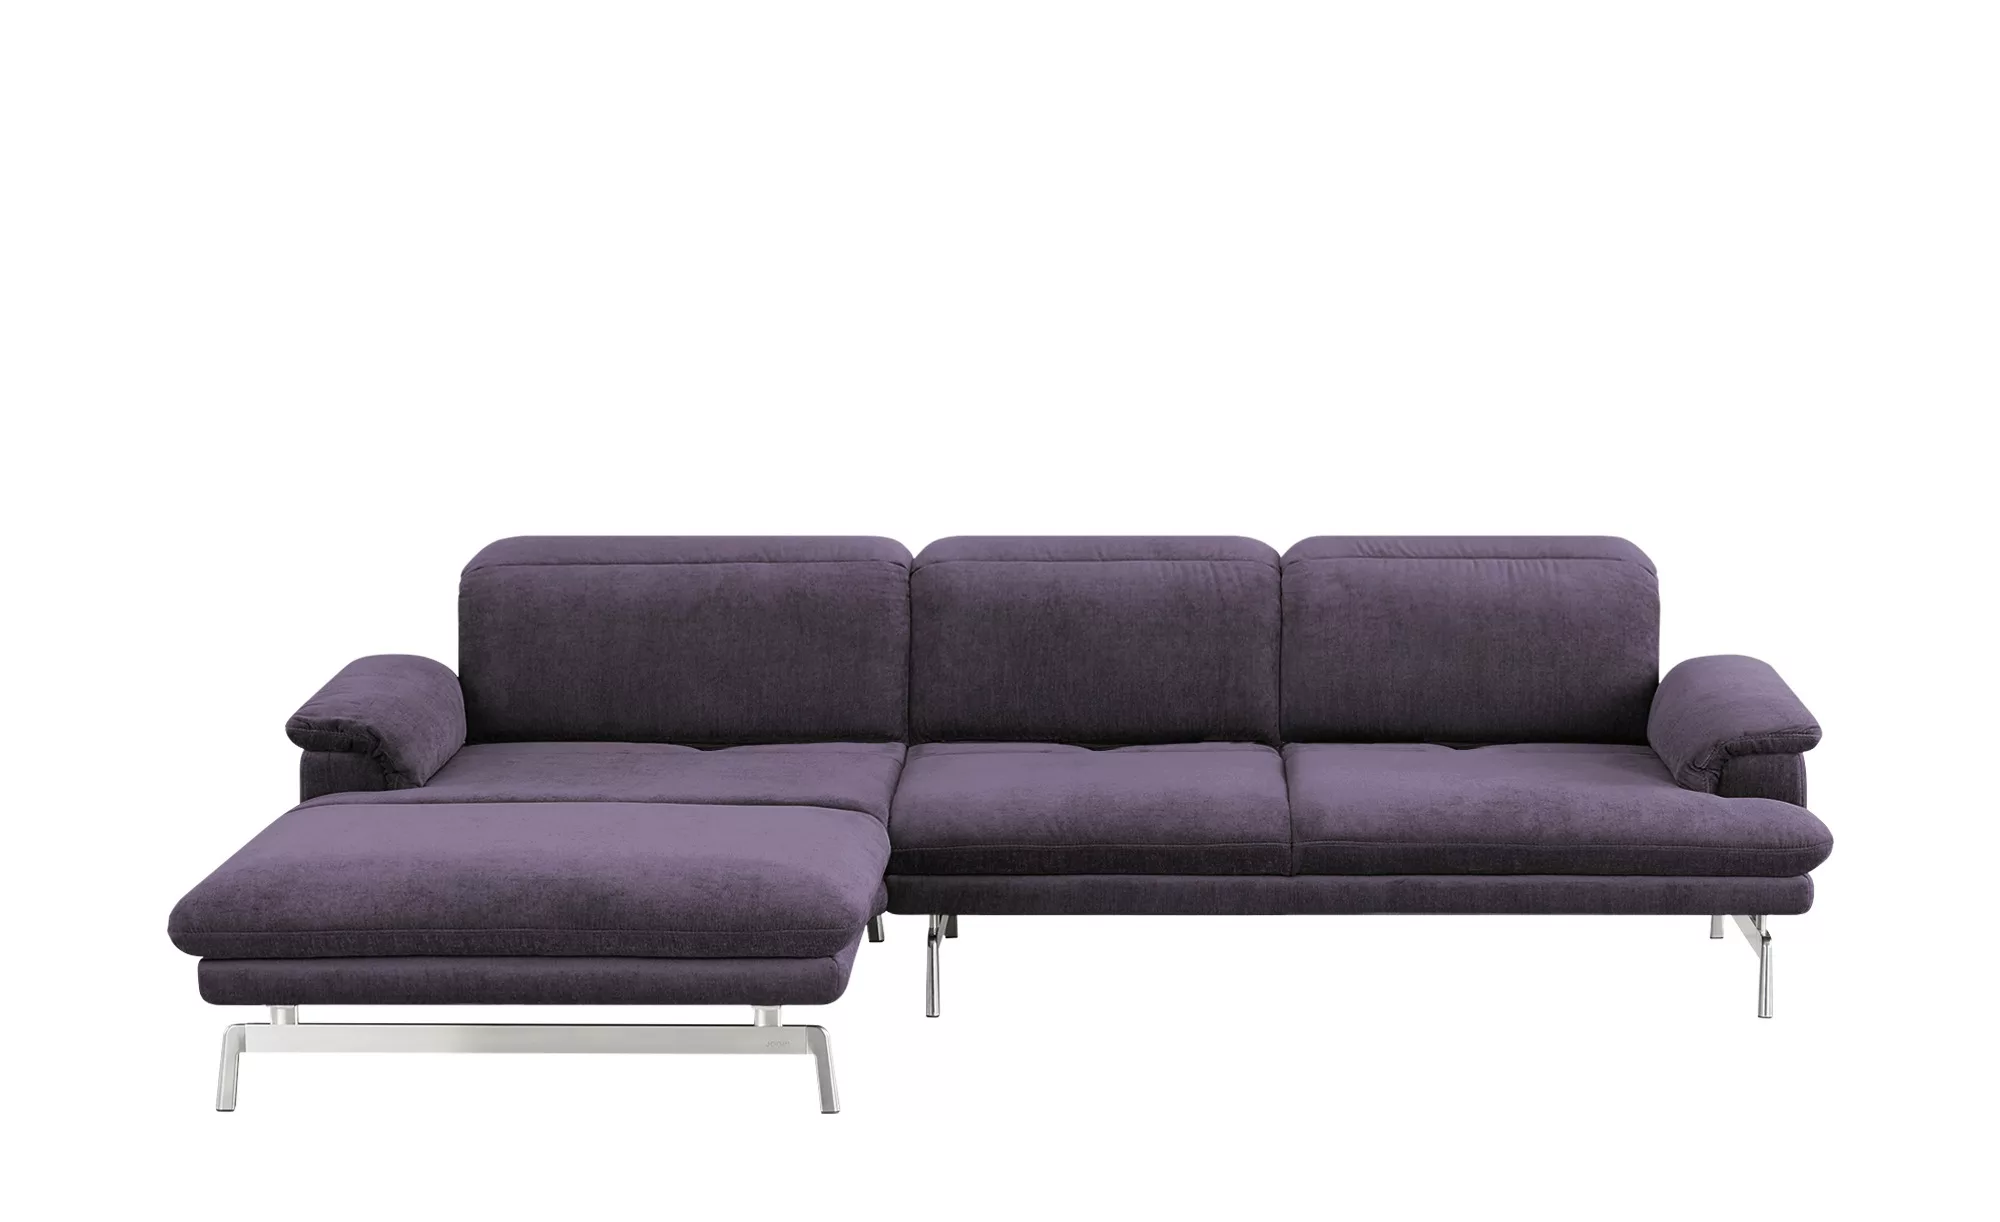 JOOP! Ecksofa  Studio 8153 - lila/violett - 82 cm - Polstermöbel > Sofas > günstig online kaufen